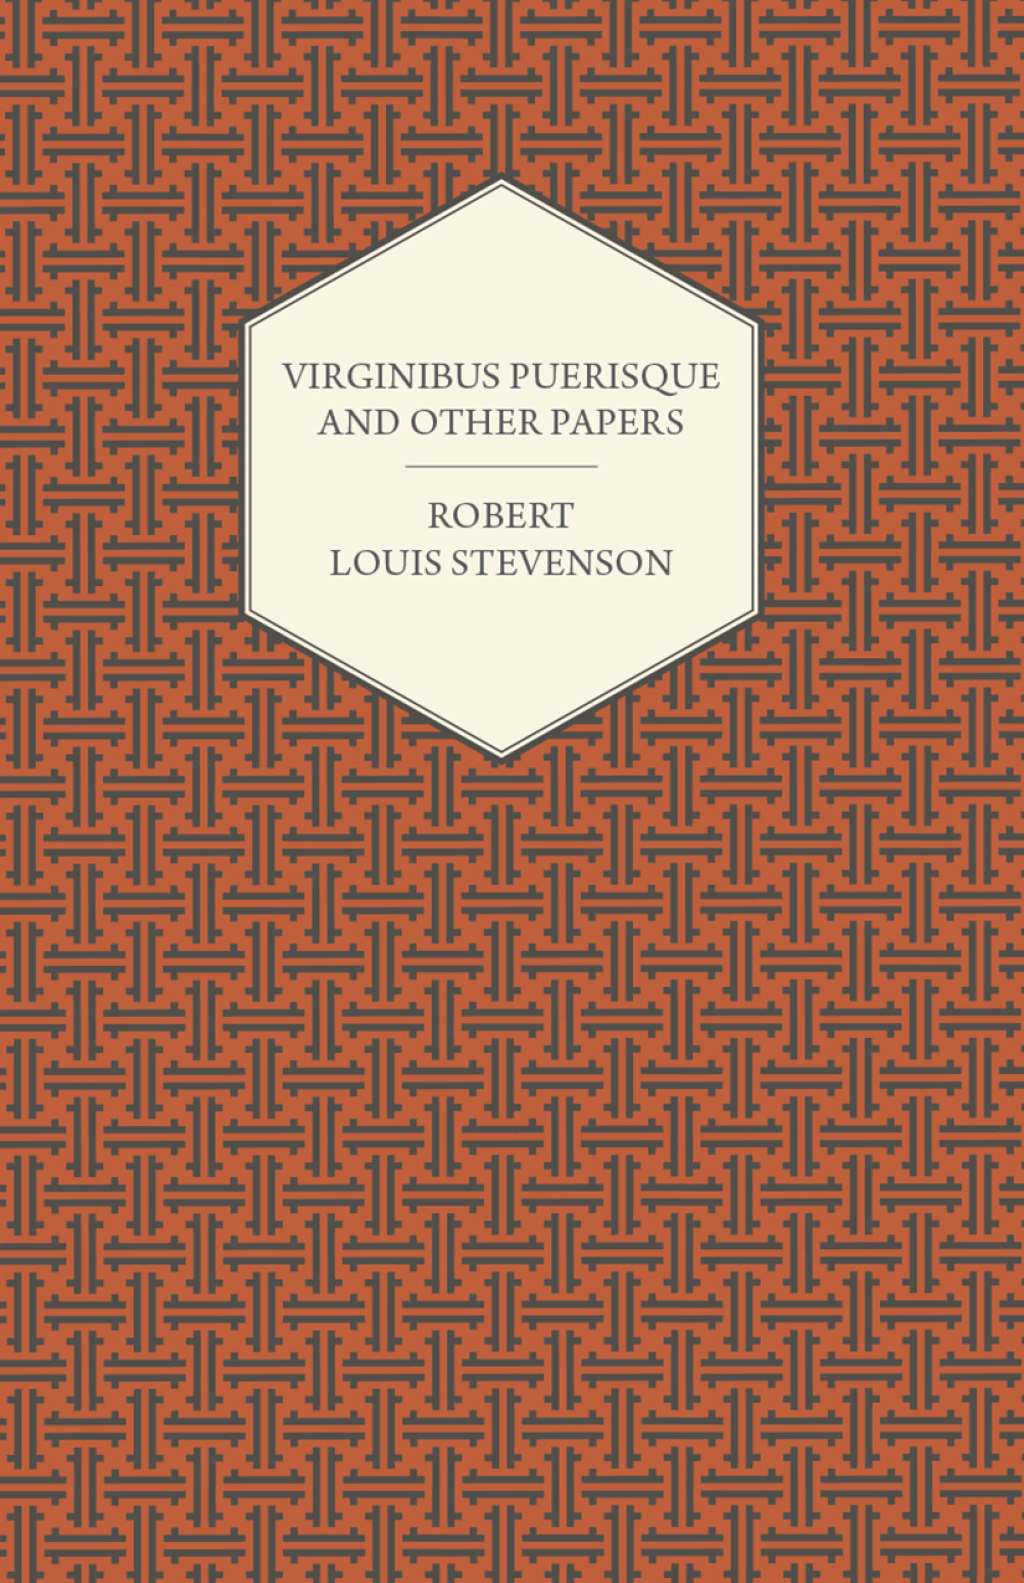 Virginibus Puerisque and Other Papers (eBook) - Robert Louis Stevenson,